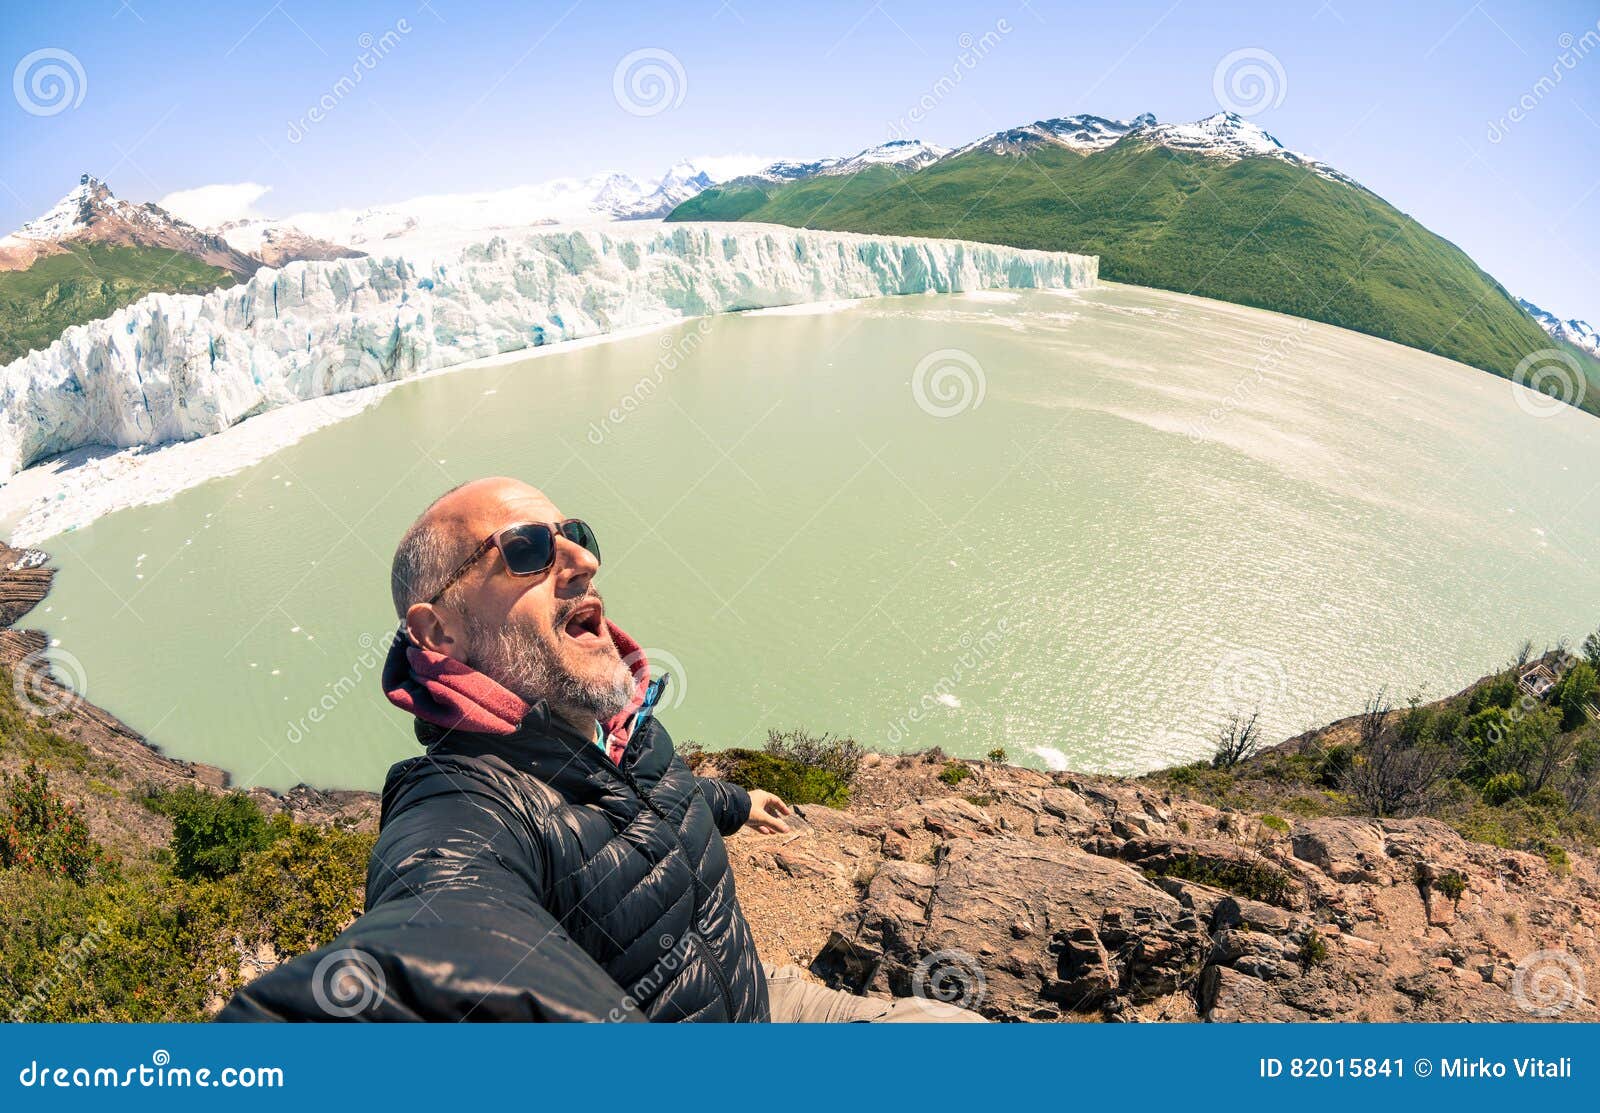 young man solo traveler taking selfie at perito moreno glaciar